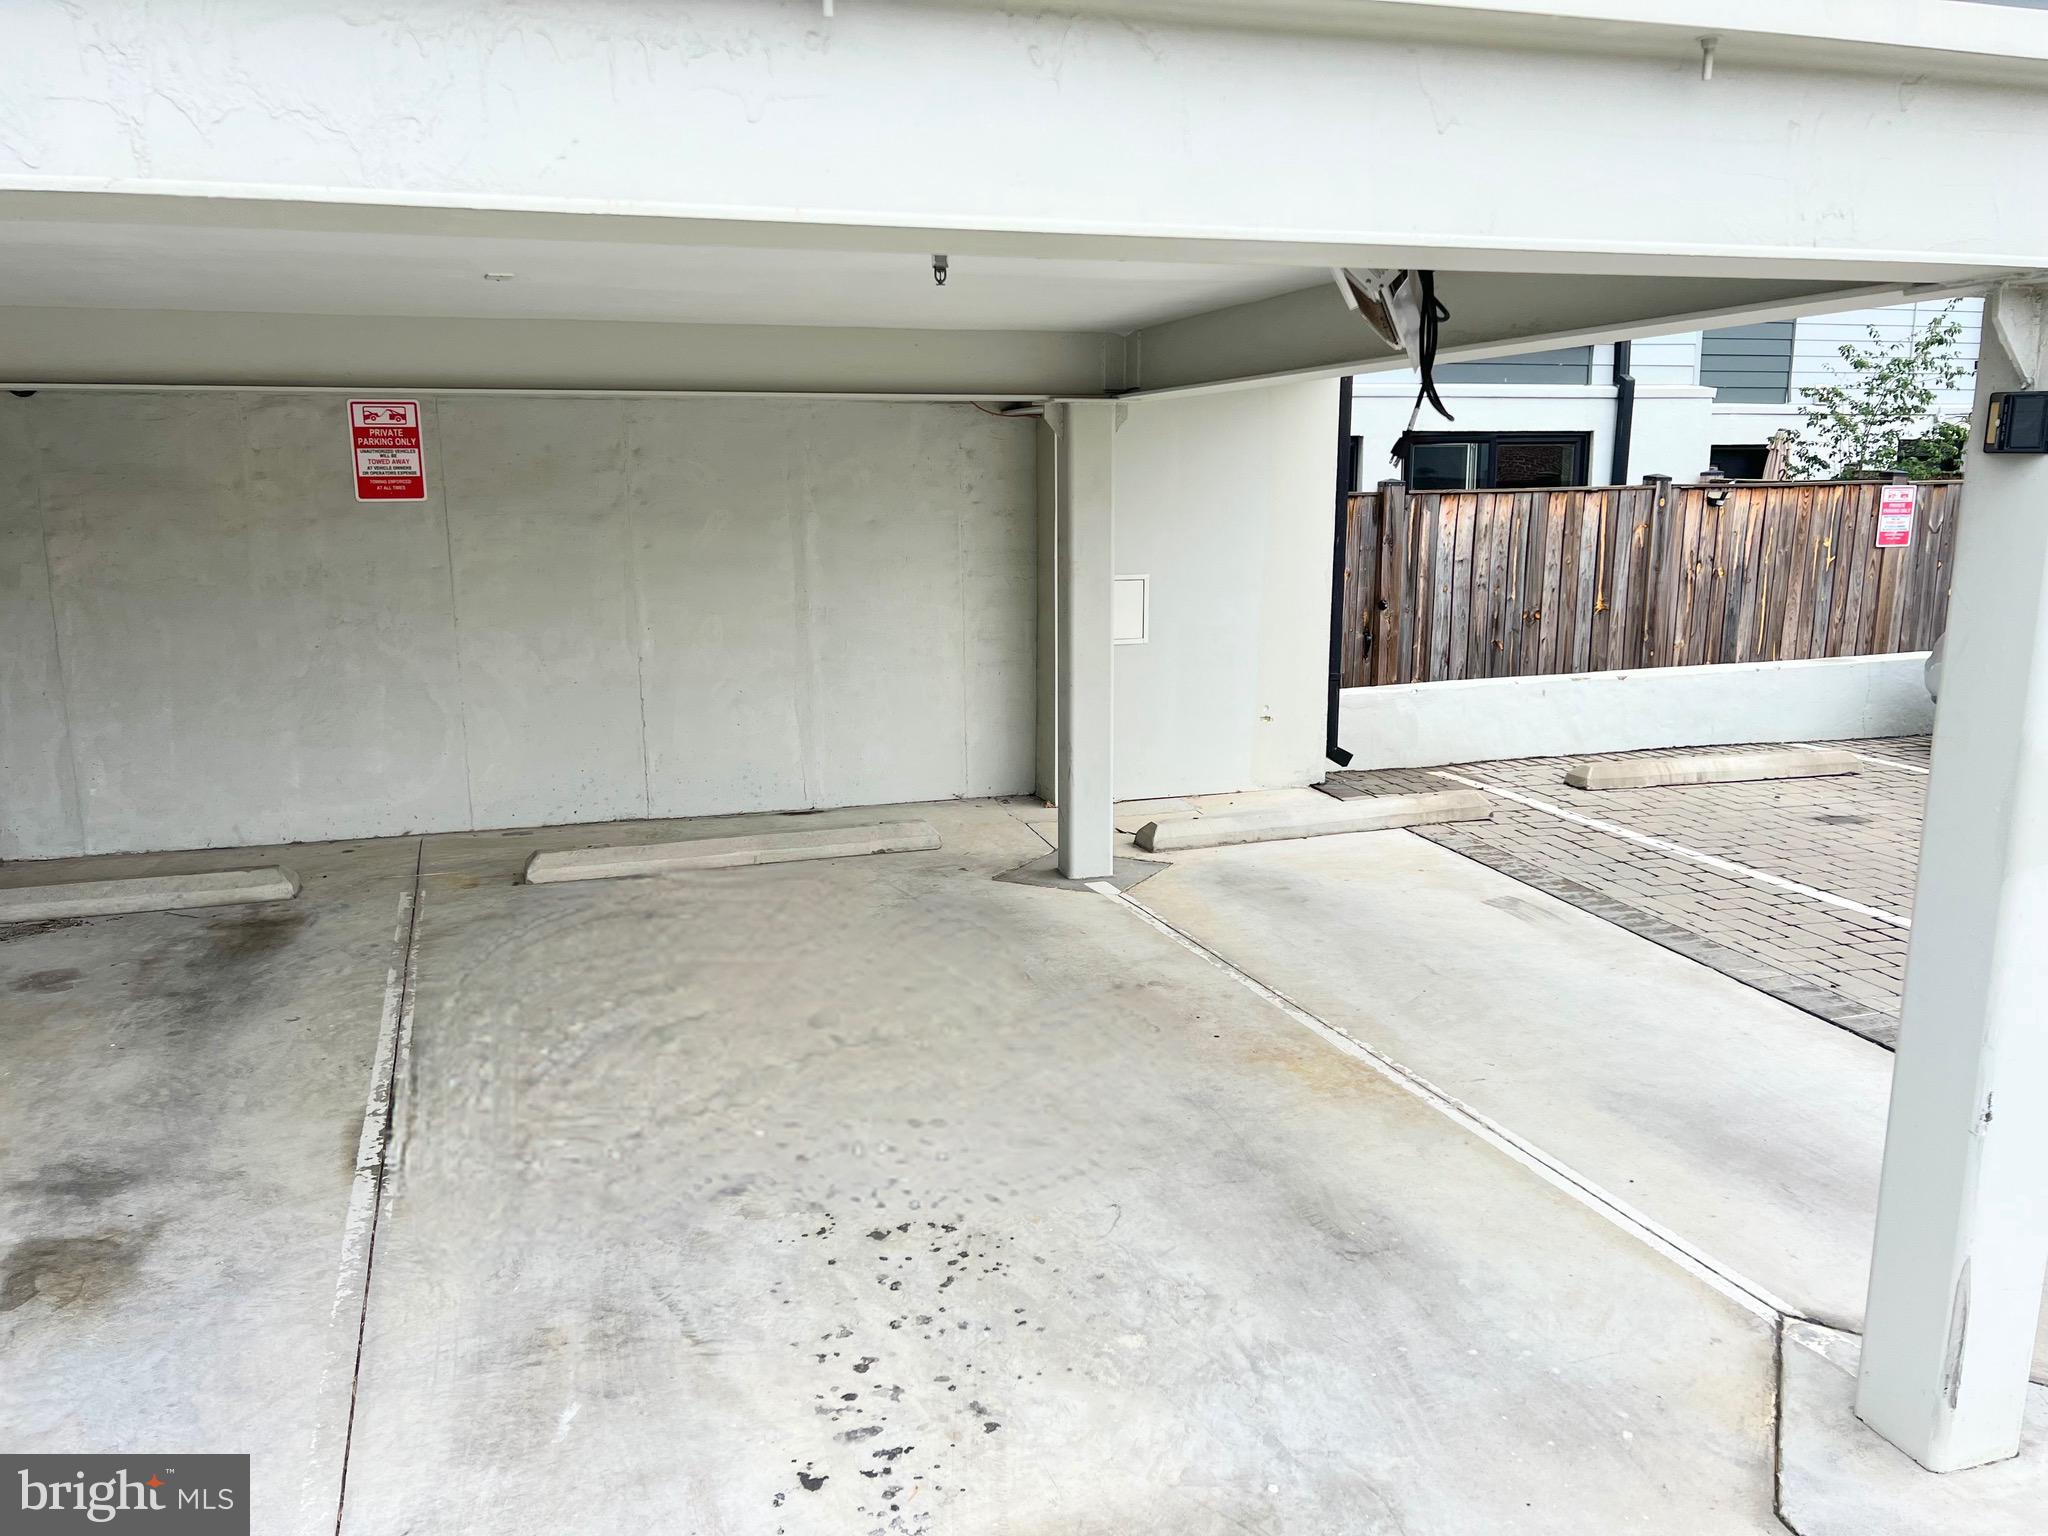 a view of a garage